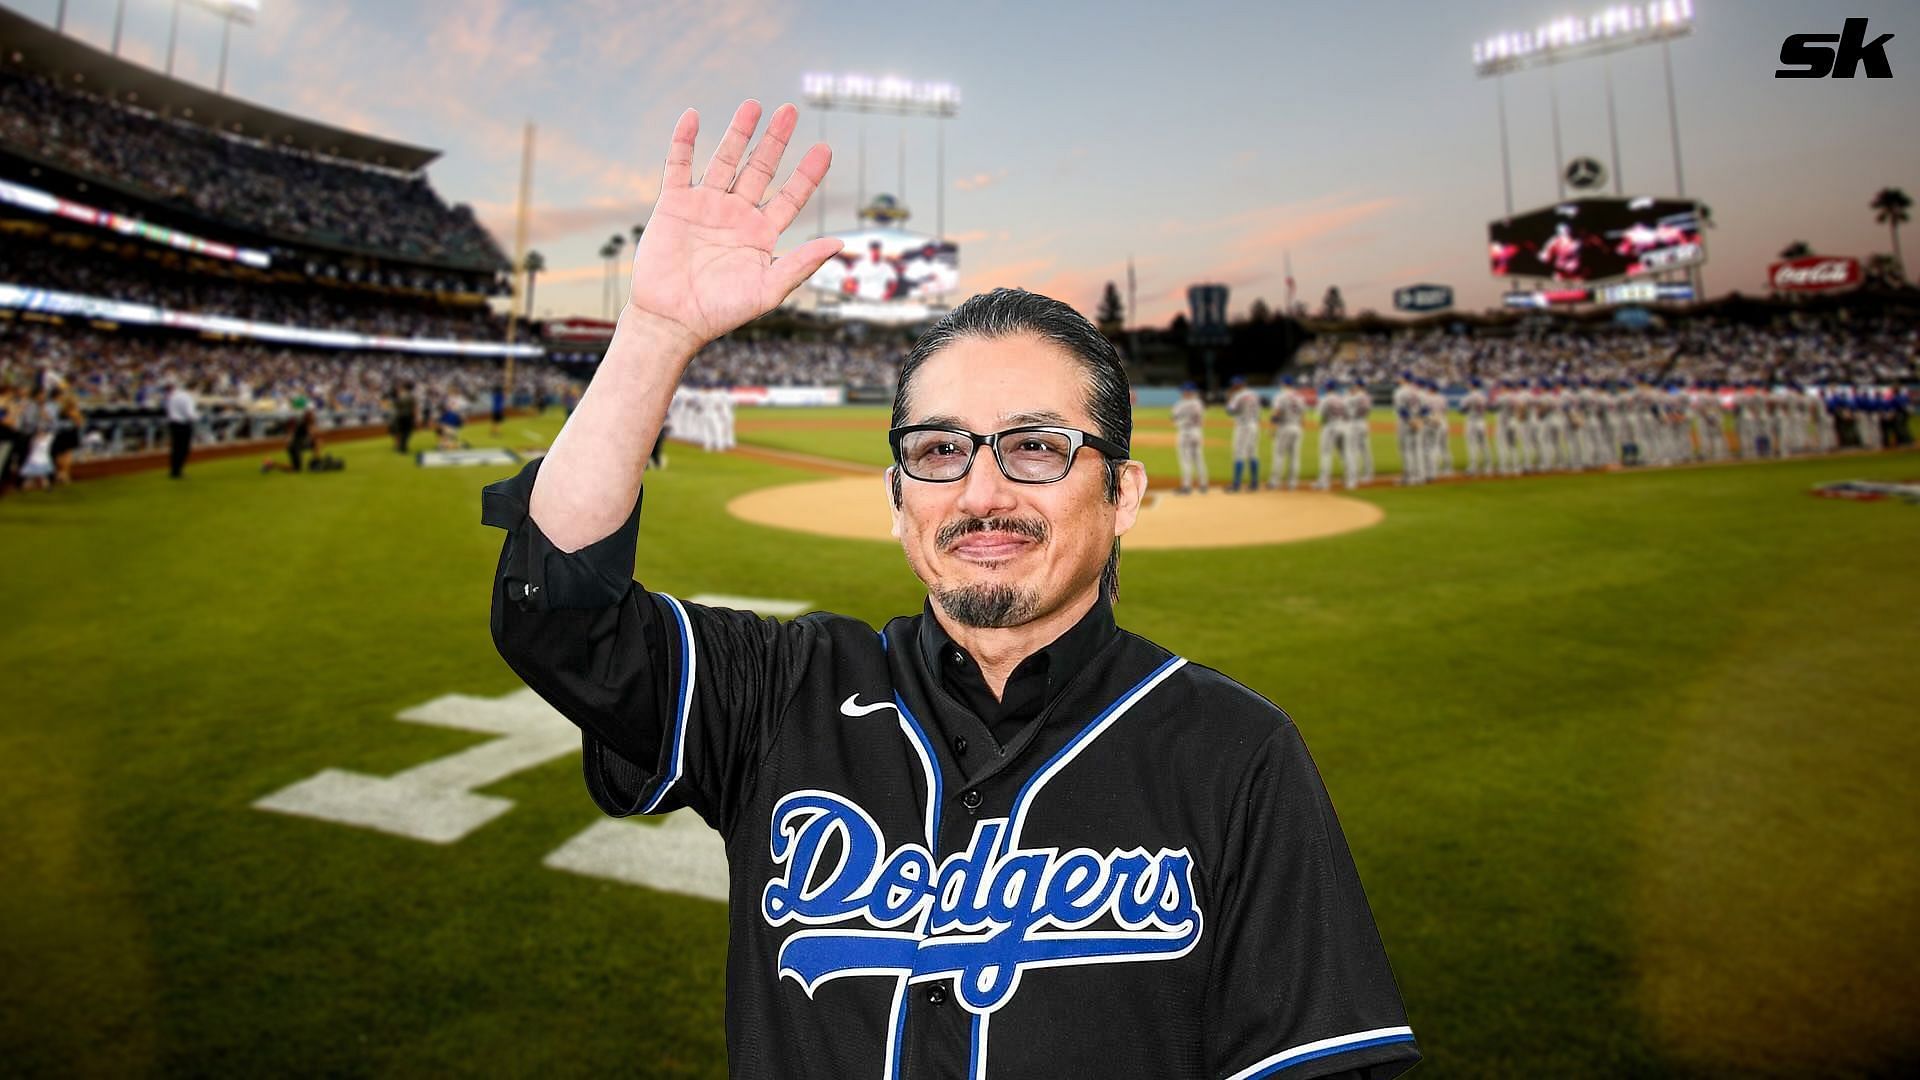 Actor Hiroyuki Sanada throws first pitch at Dodger stadium